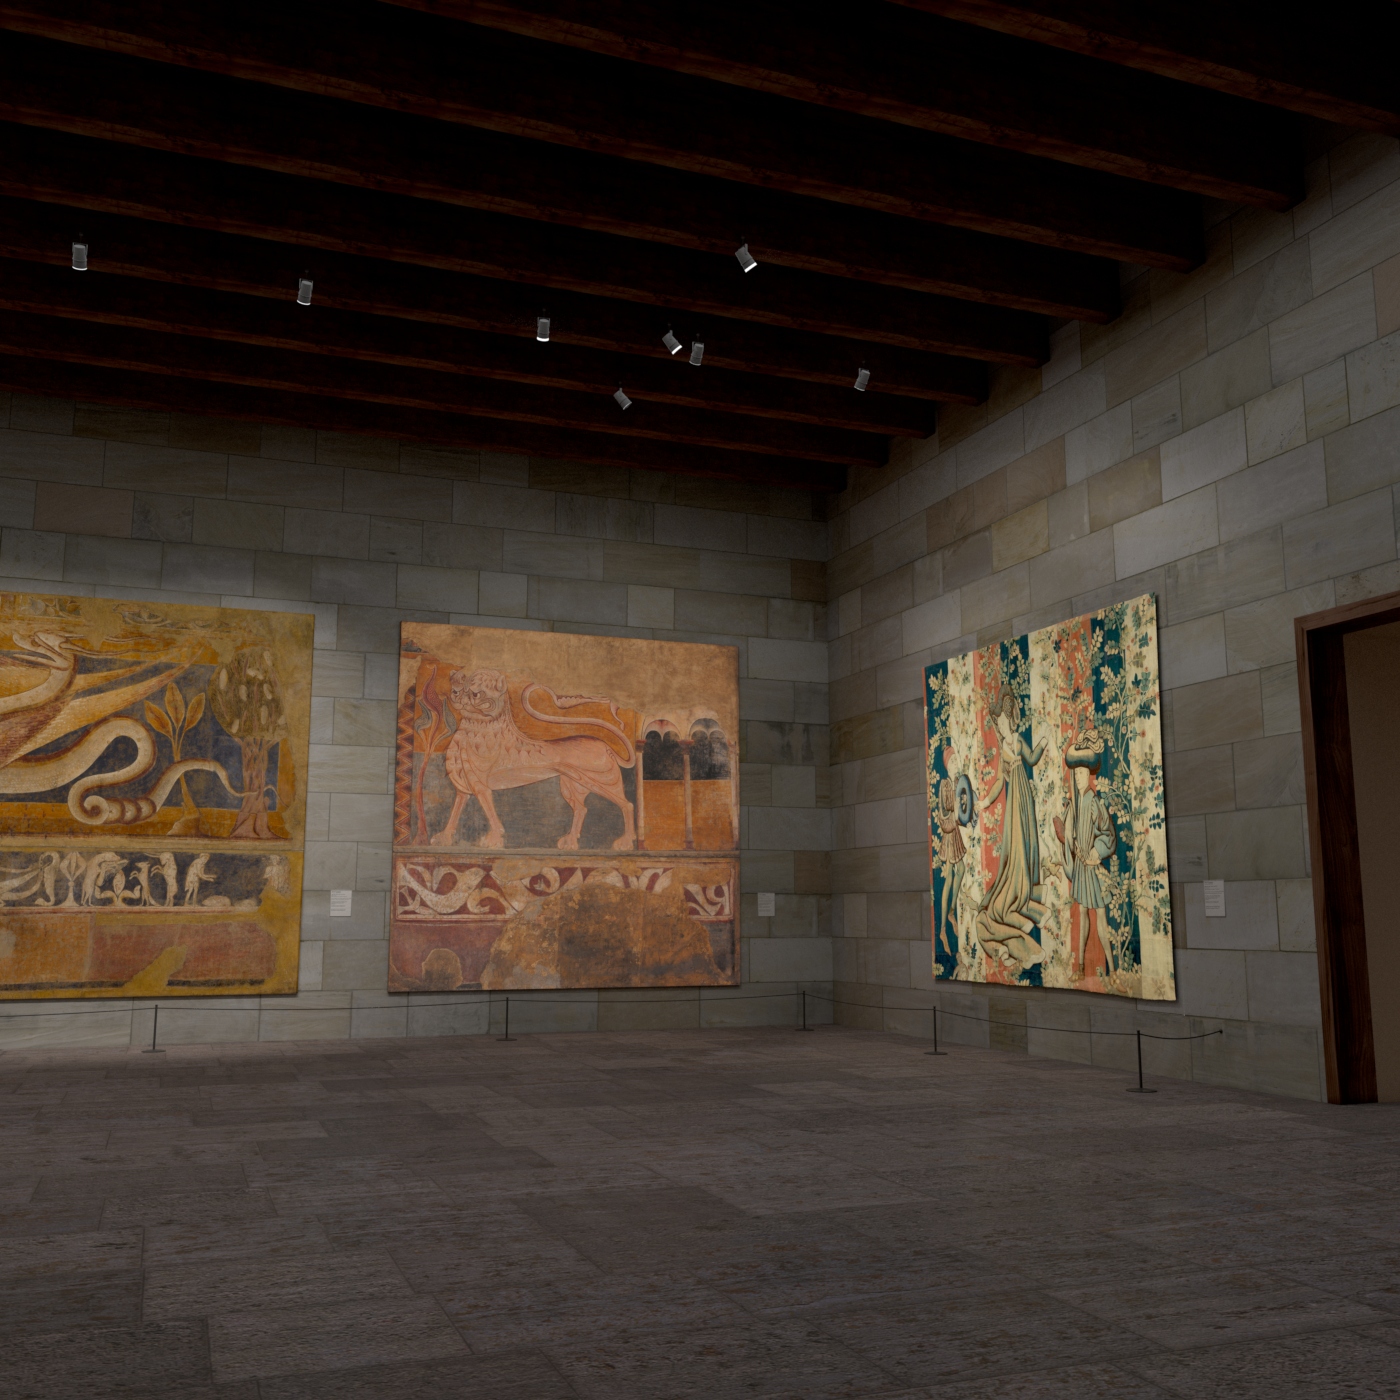 The Metropolitan Museum of Art and Verizon launch new AR app experience,  Replica, News Release